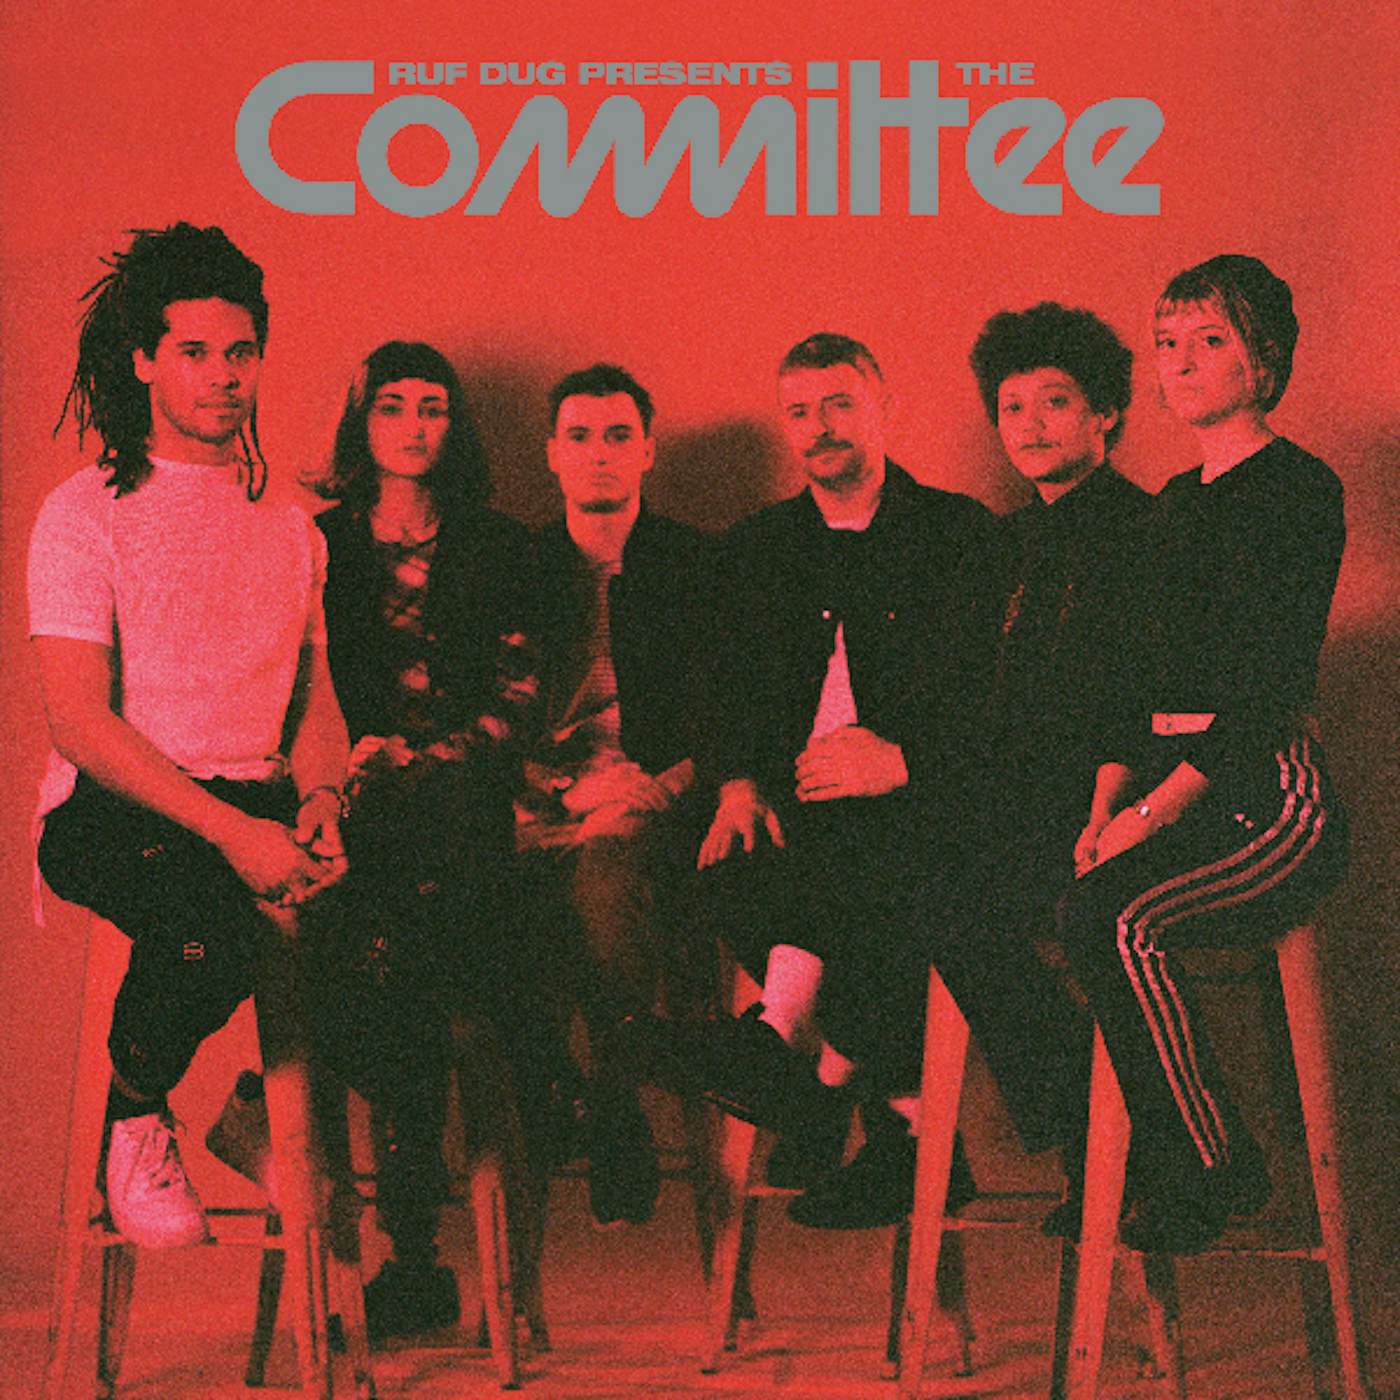 Ruf Dug presents The Committee Vinyl Record